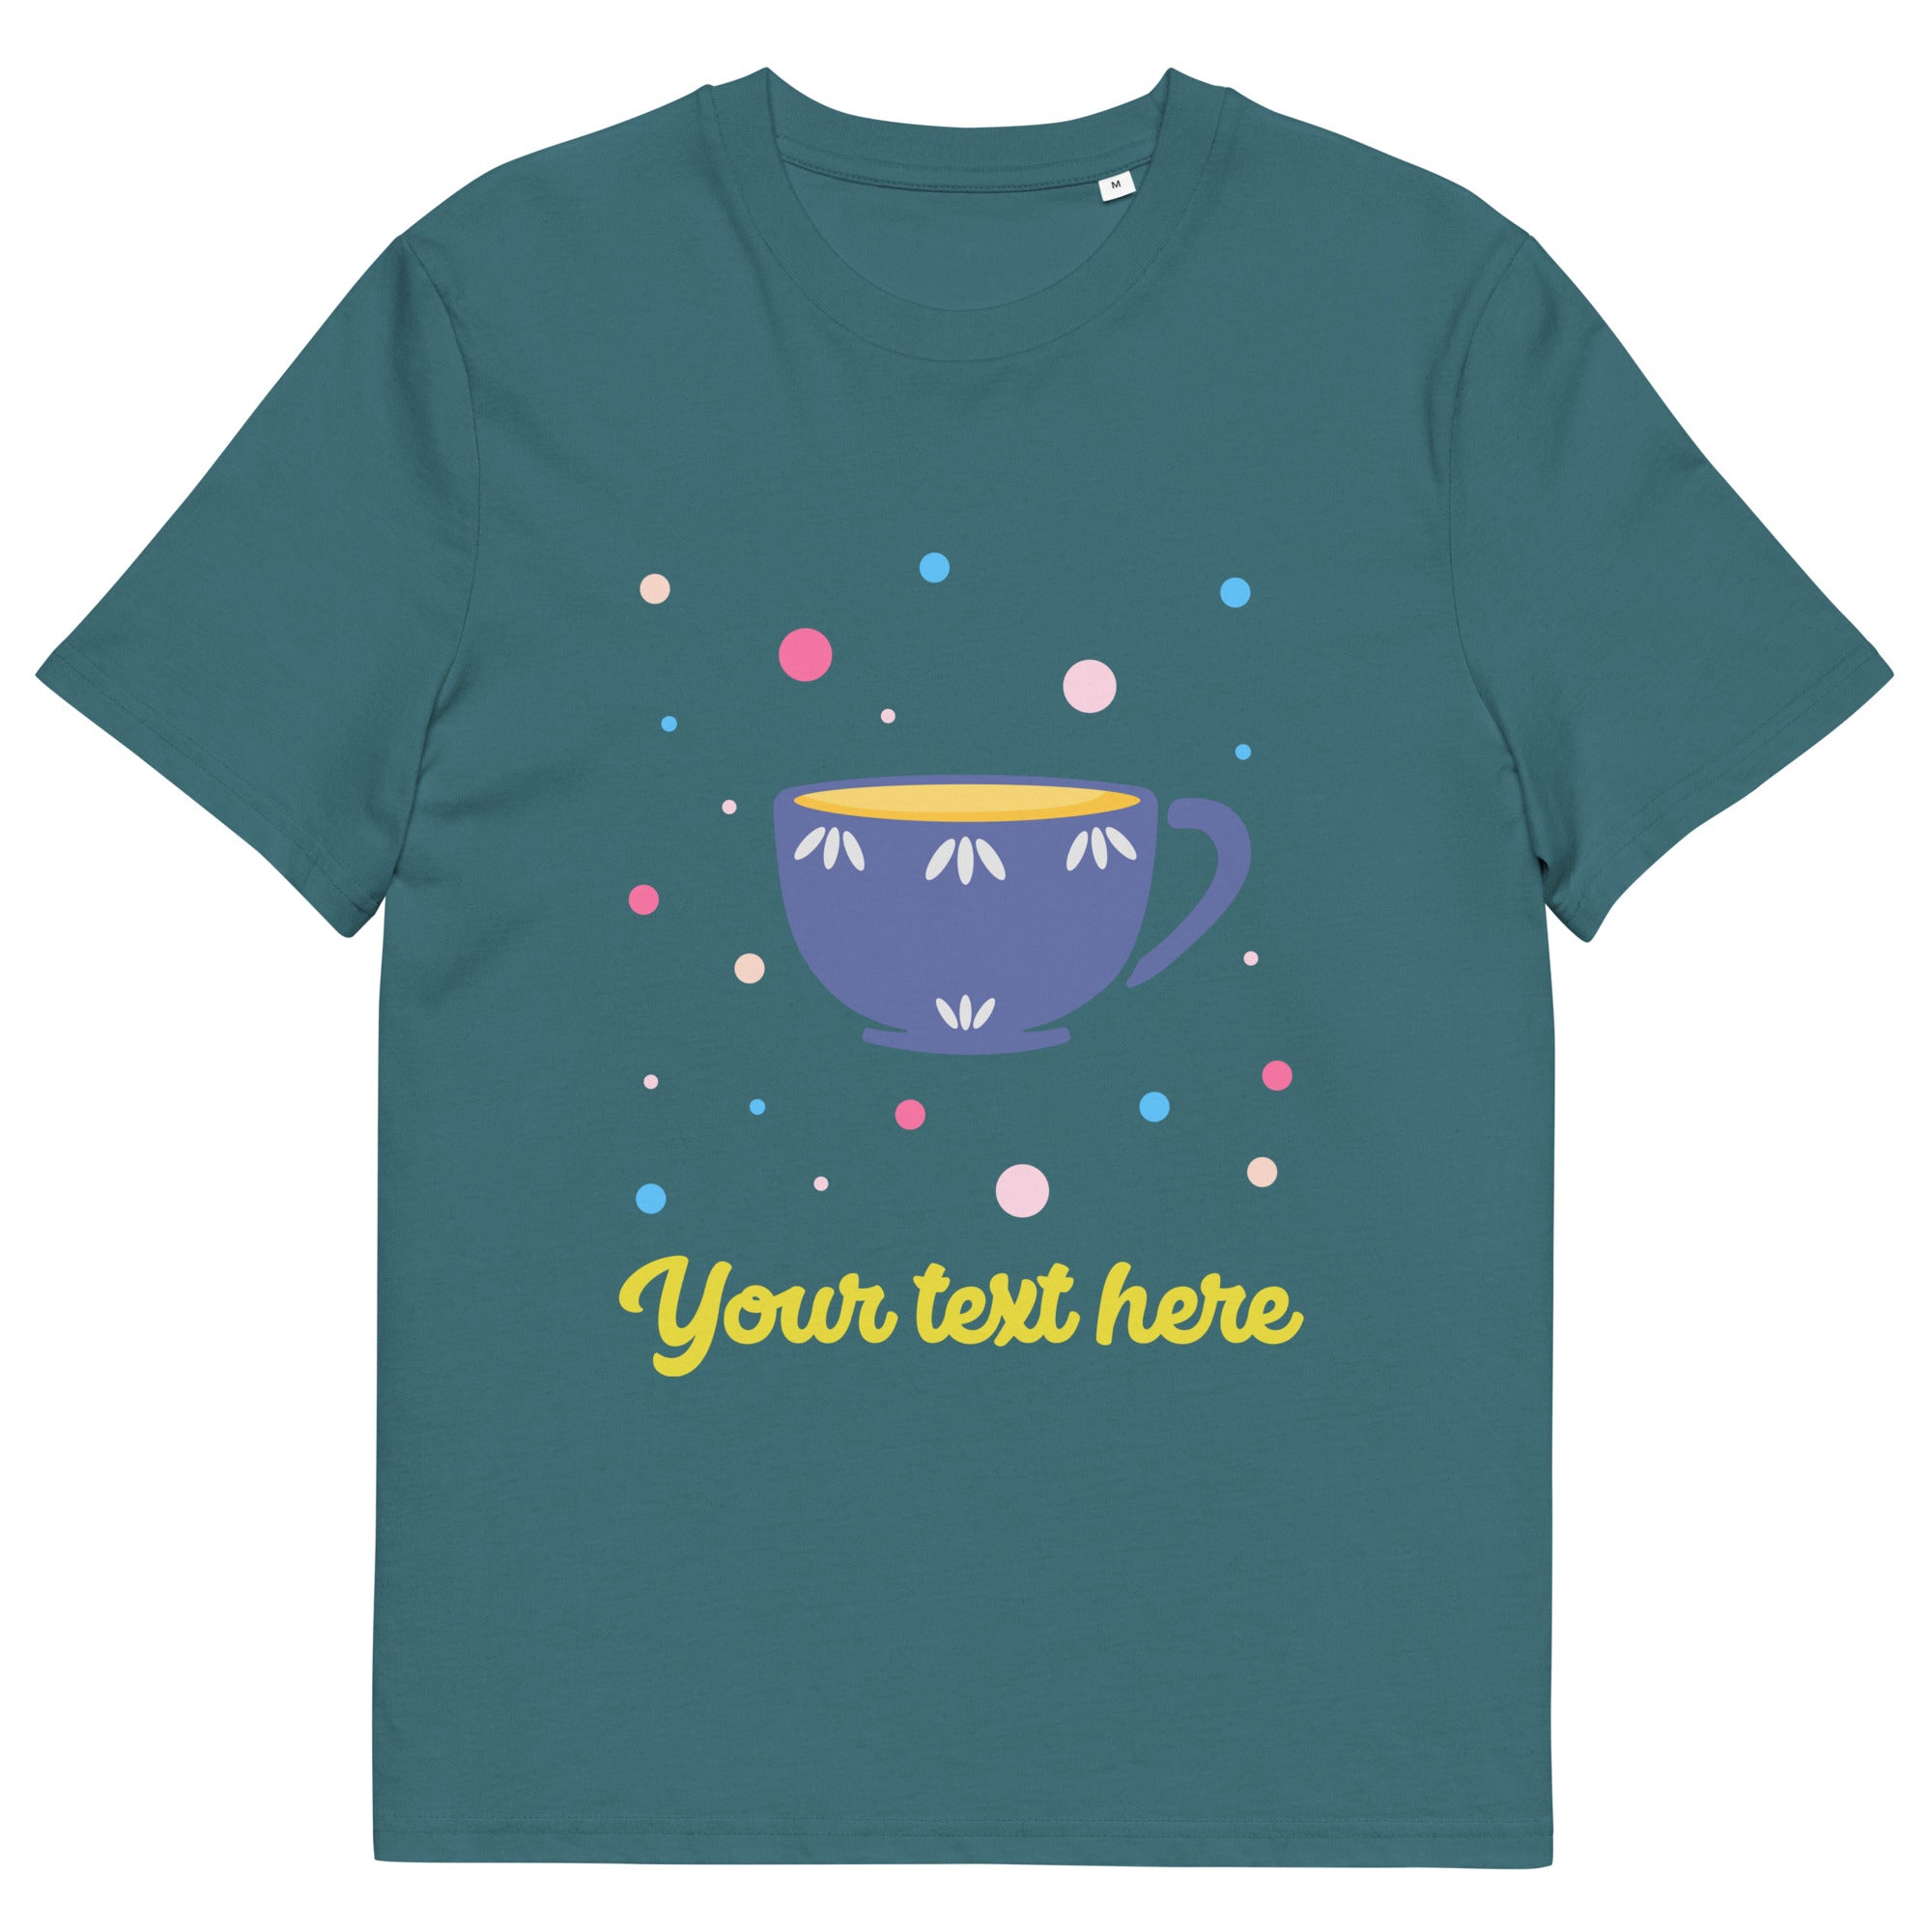 Personalised Custom Text - Organic Cotton Adults Unisex T-Shirt - London Doodles - Cup Of Tea - Stargazer